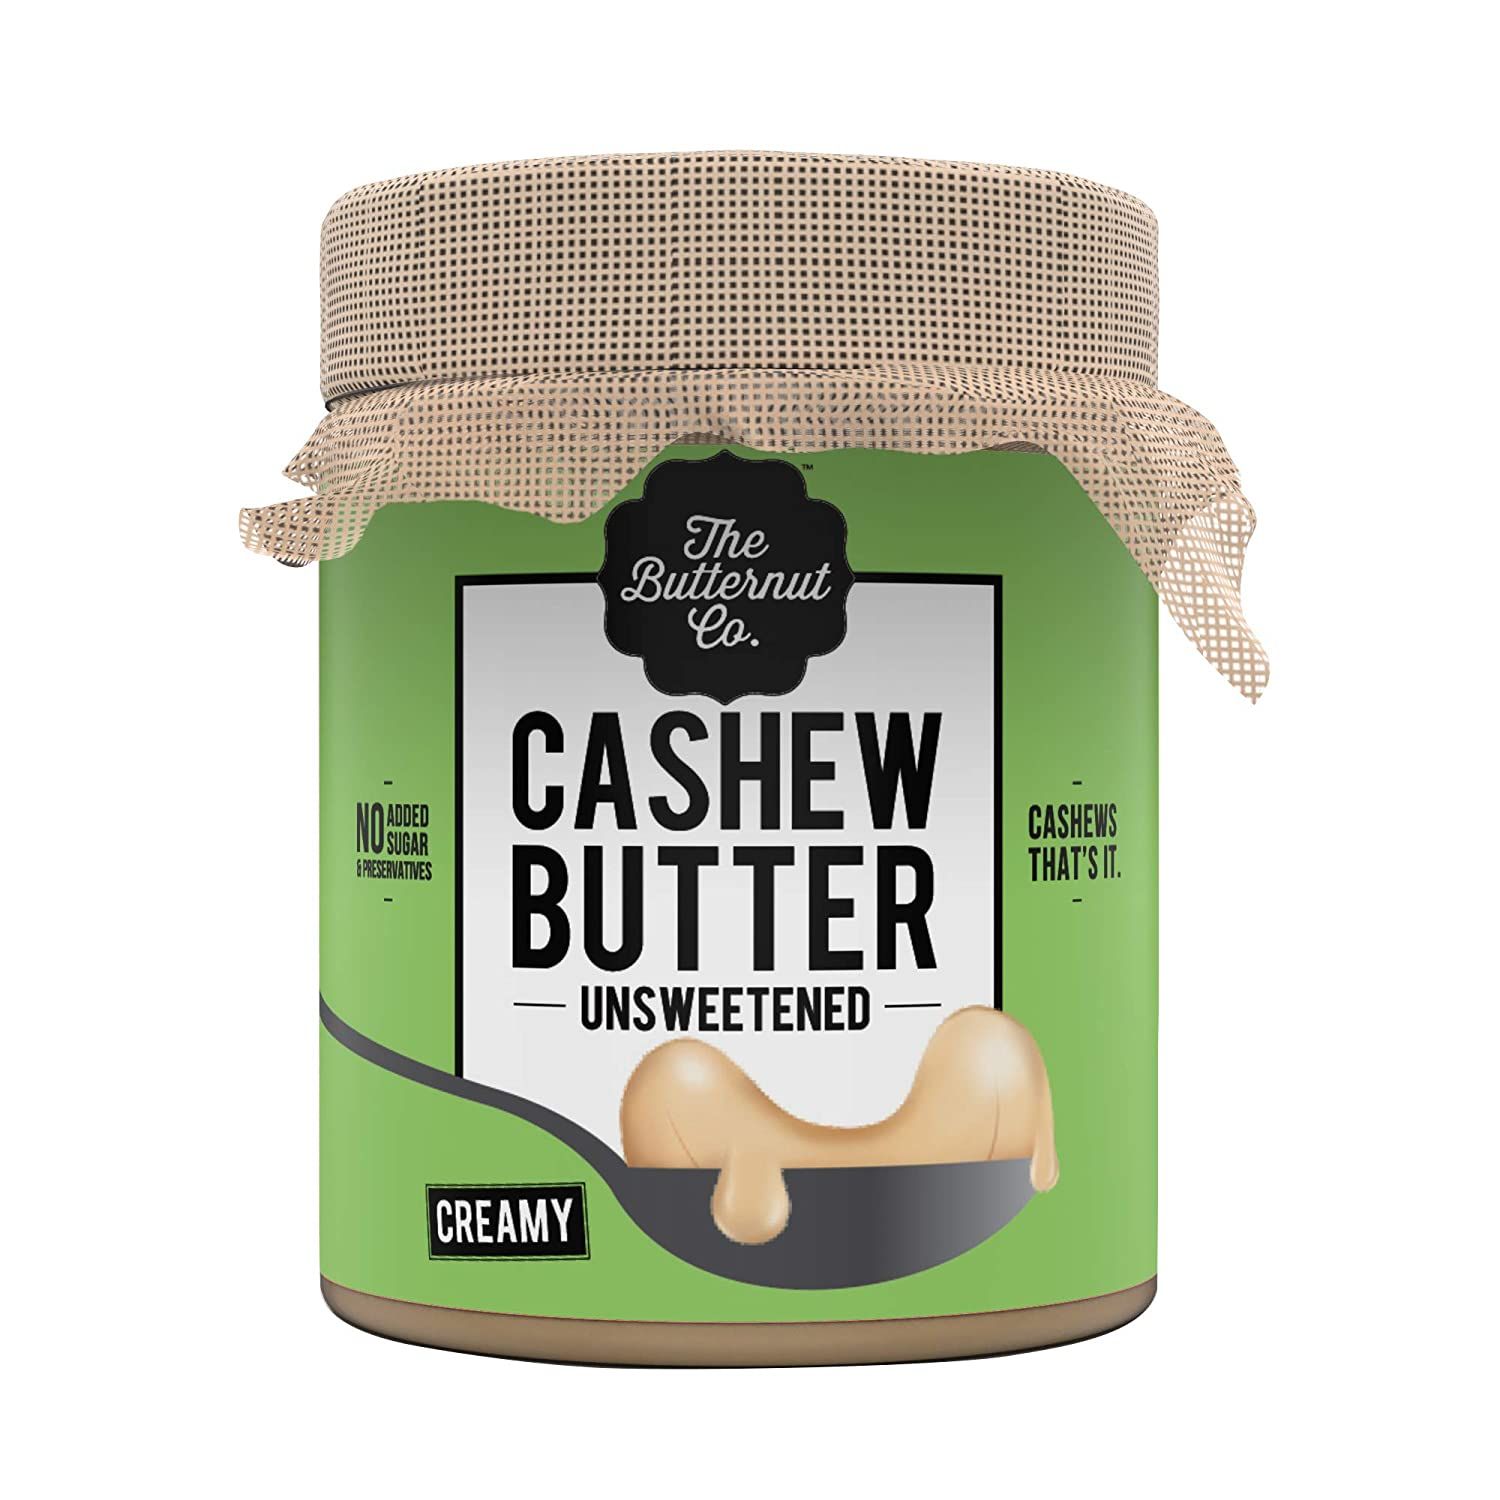 The Butternut Co Cashew Butter Image